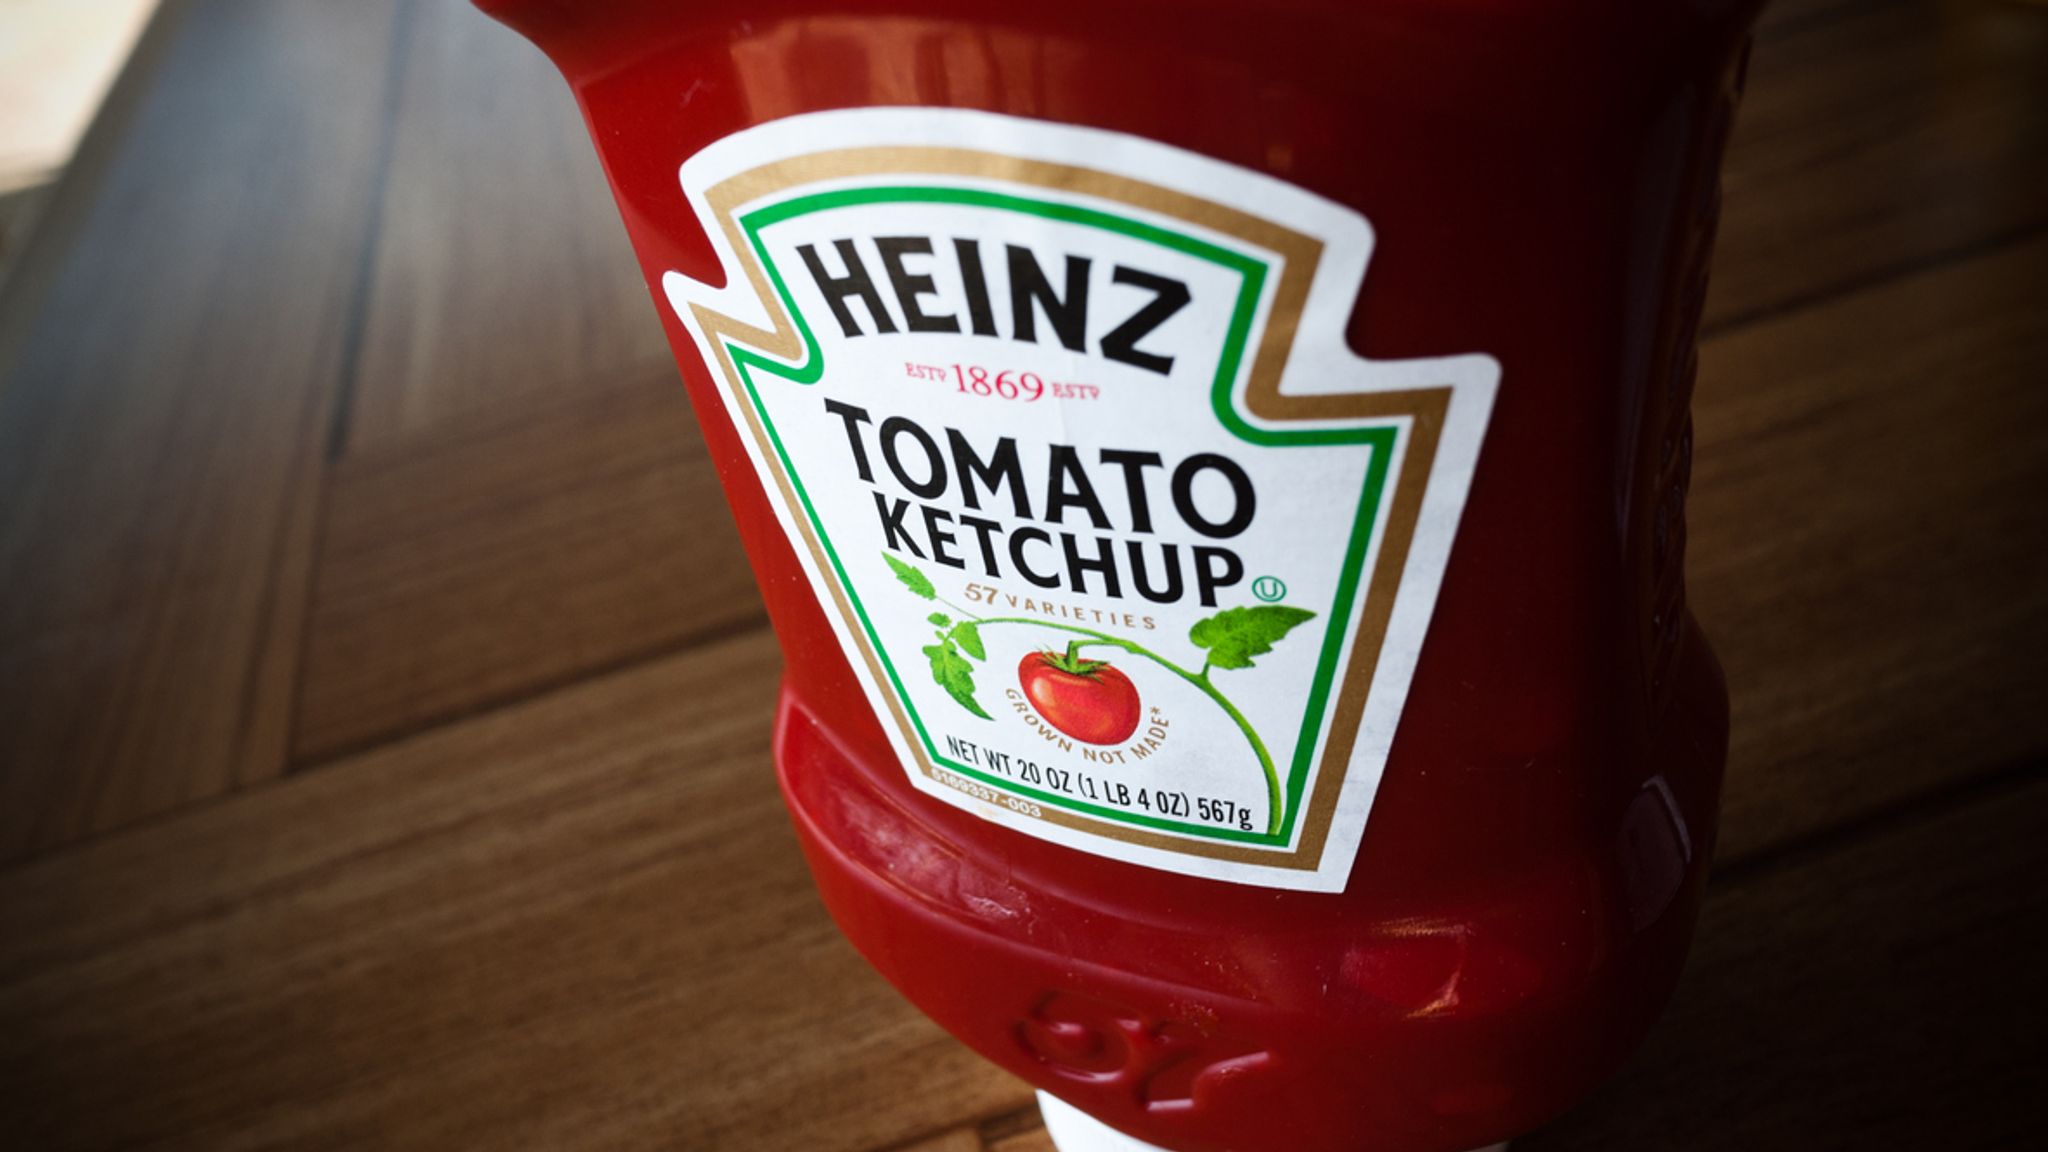 Ketchup Top-Down 250g Heinz